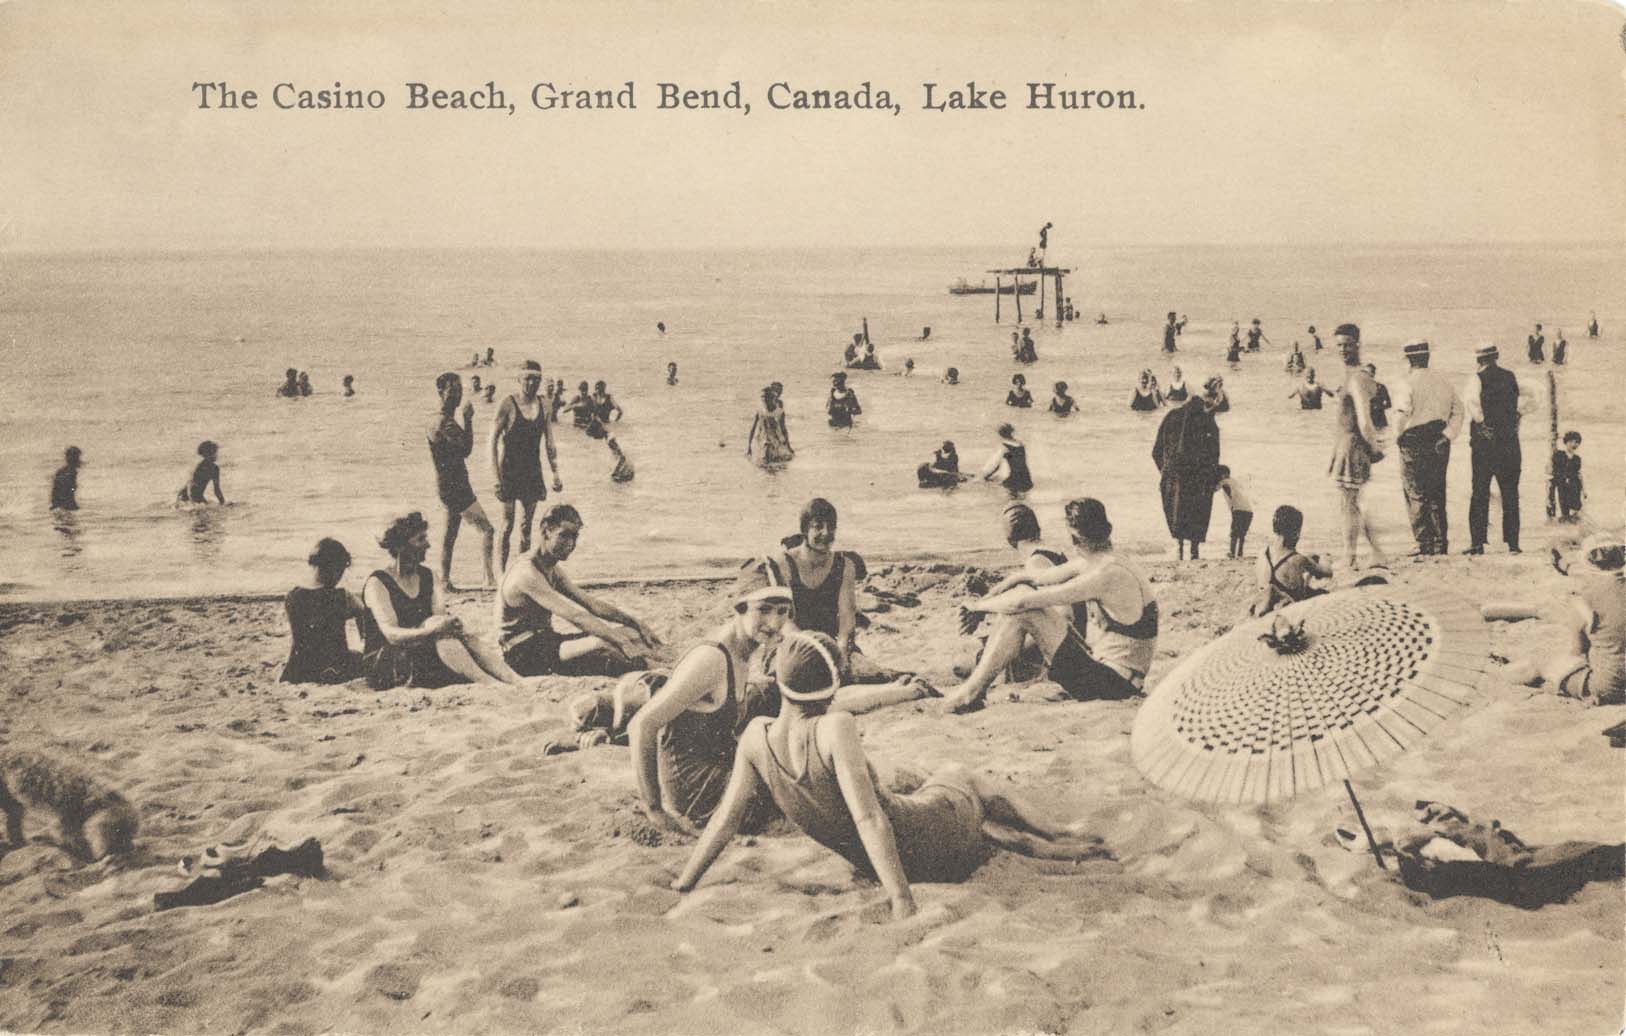 People enjoying the beach in the year 1920